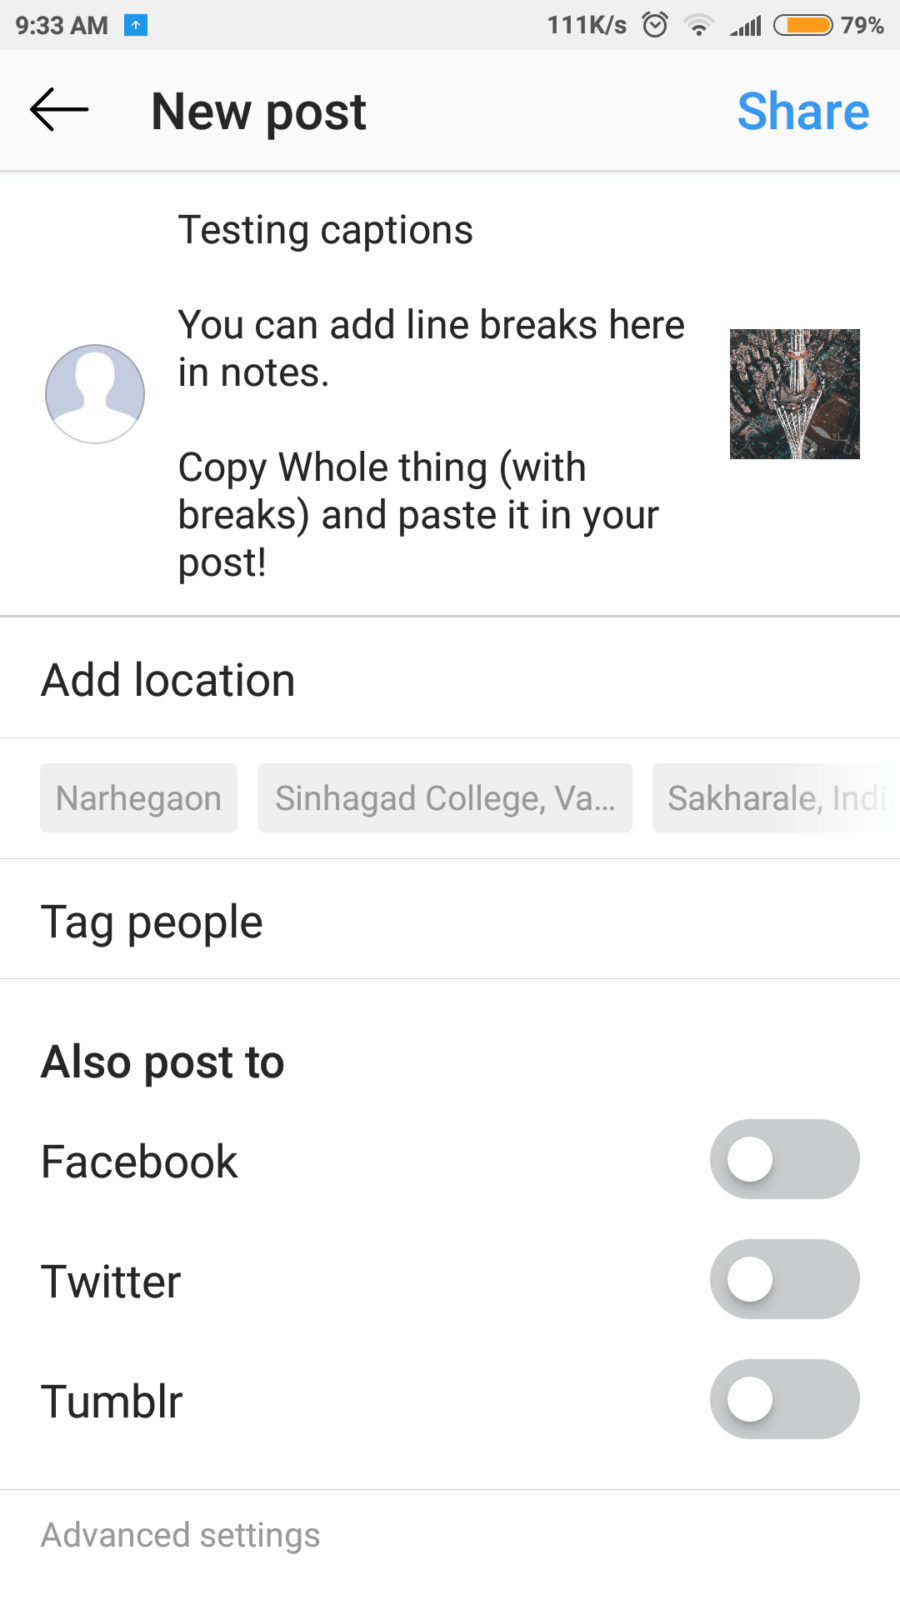  Line breaks on Instagram via Notes